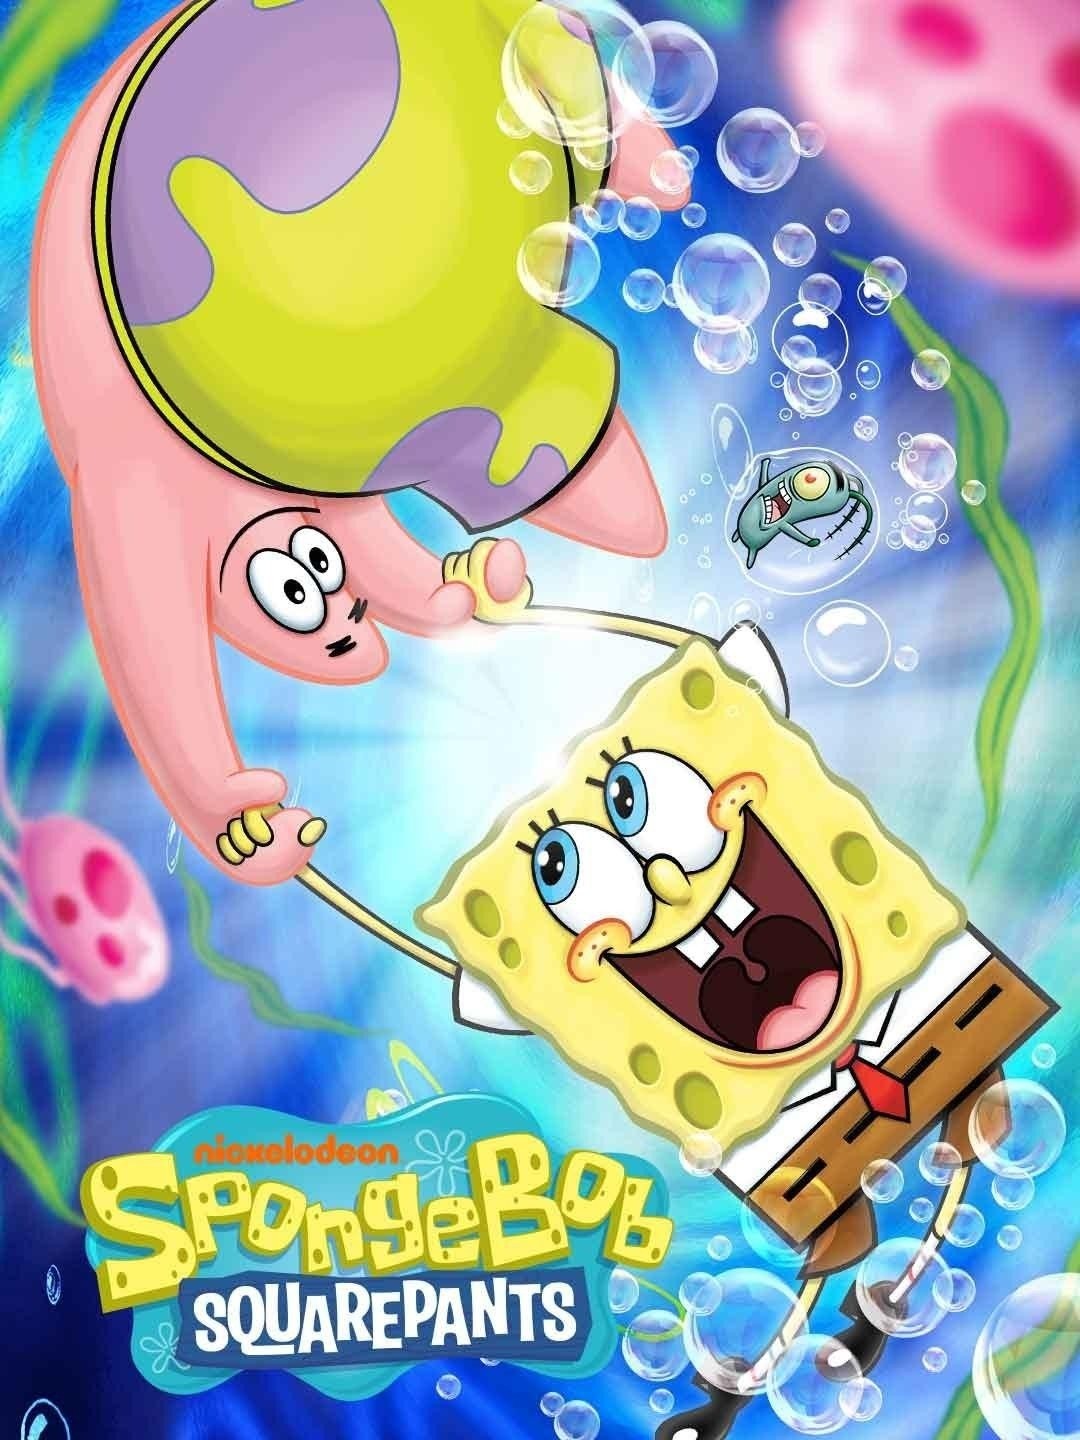 spongebob biting nails